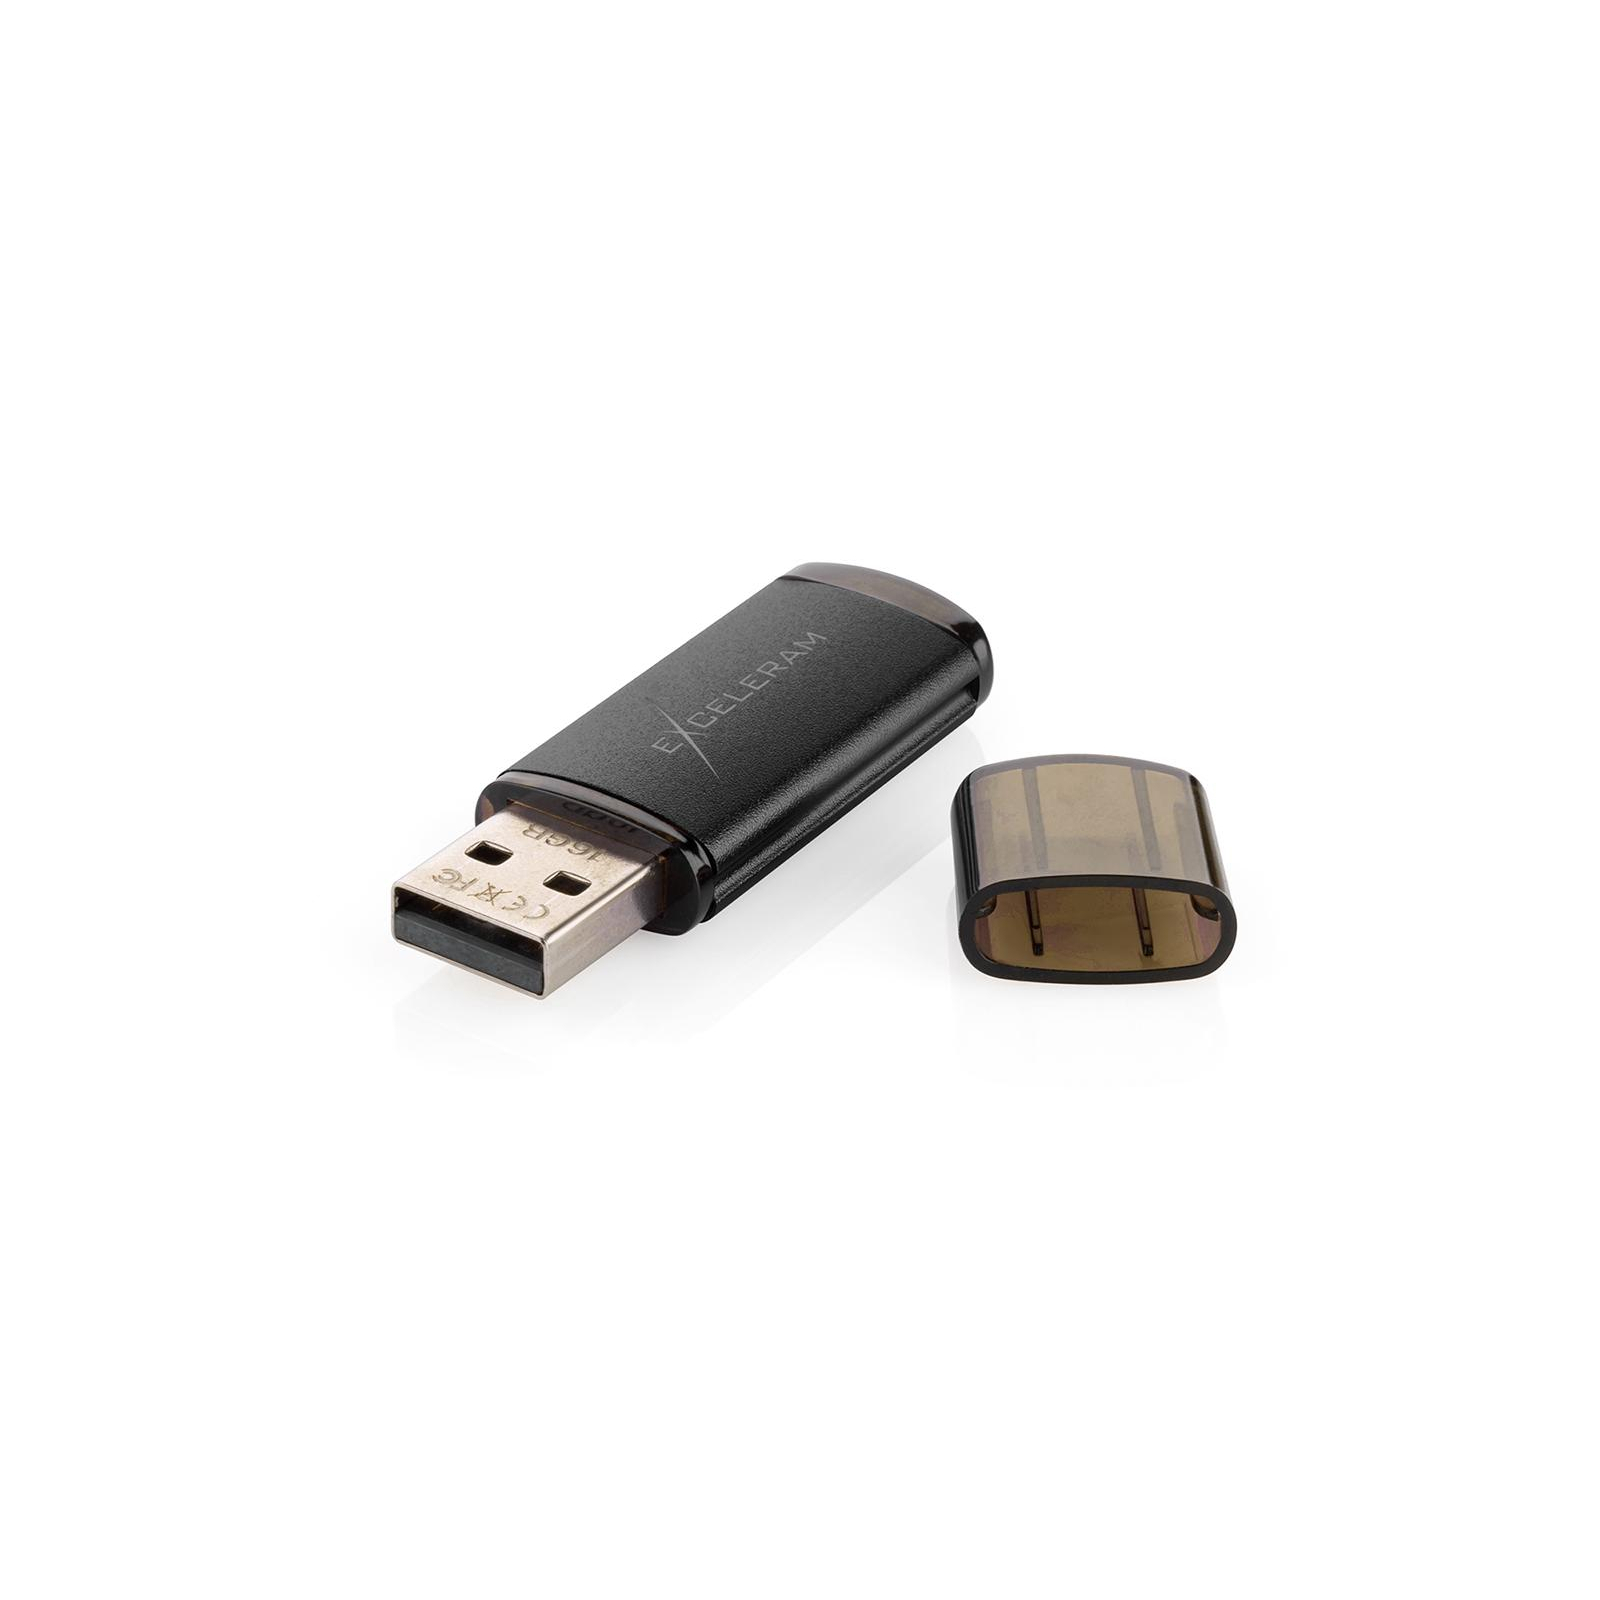 USB флеш накопитель eXceleram 16GB A3 Series Black USB 2.0 (EXA3U2B16) изображение 5